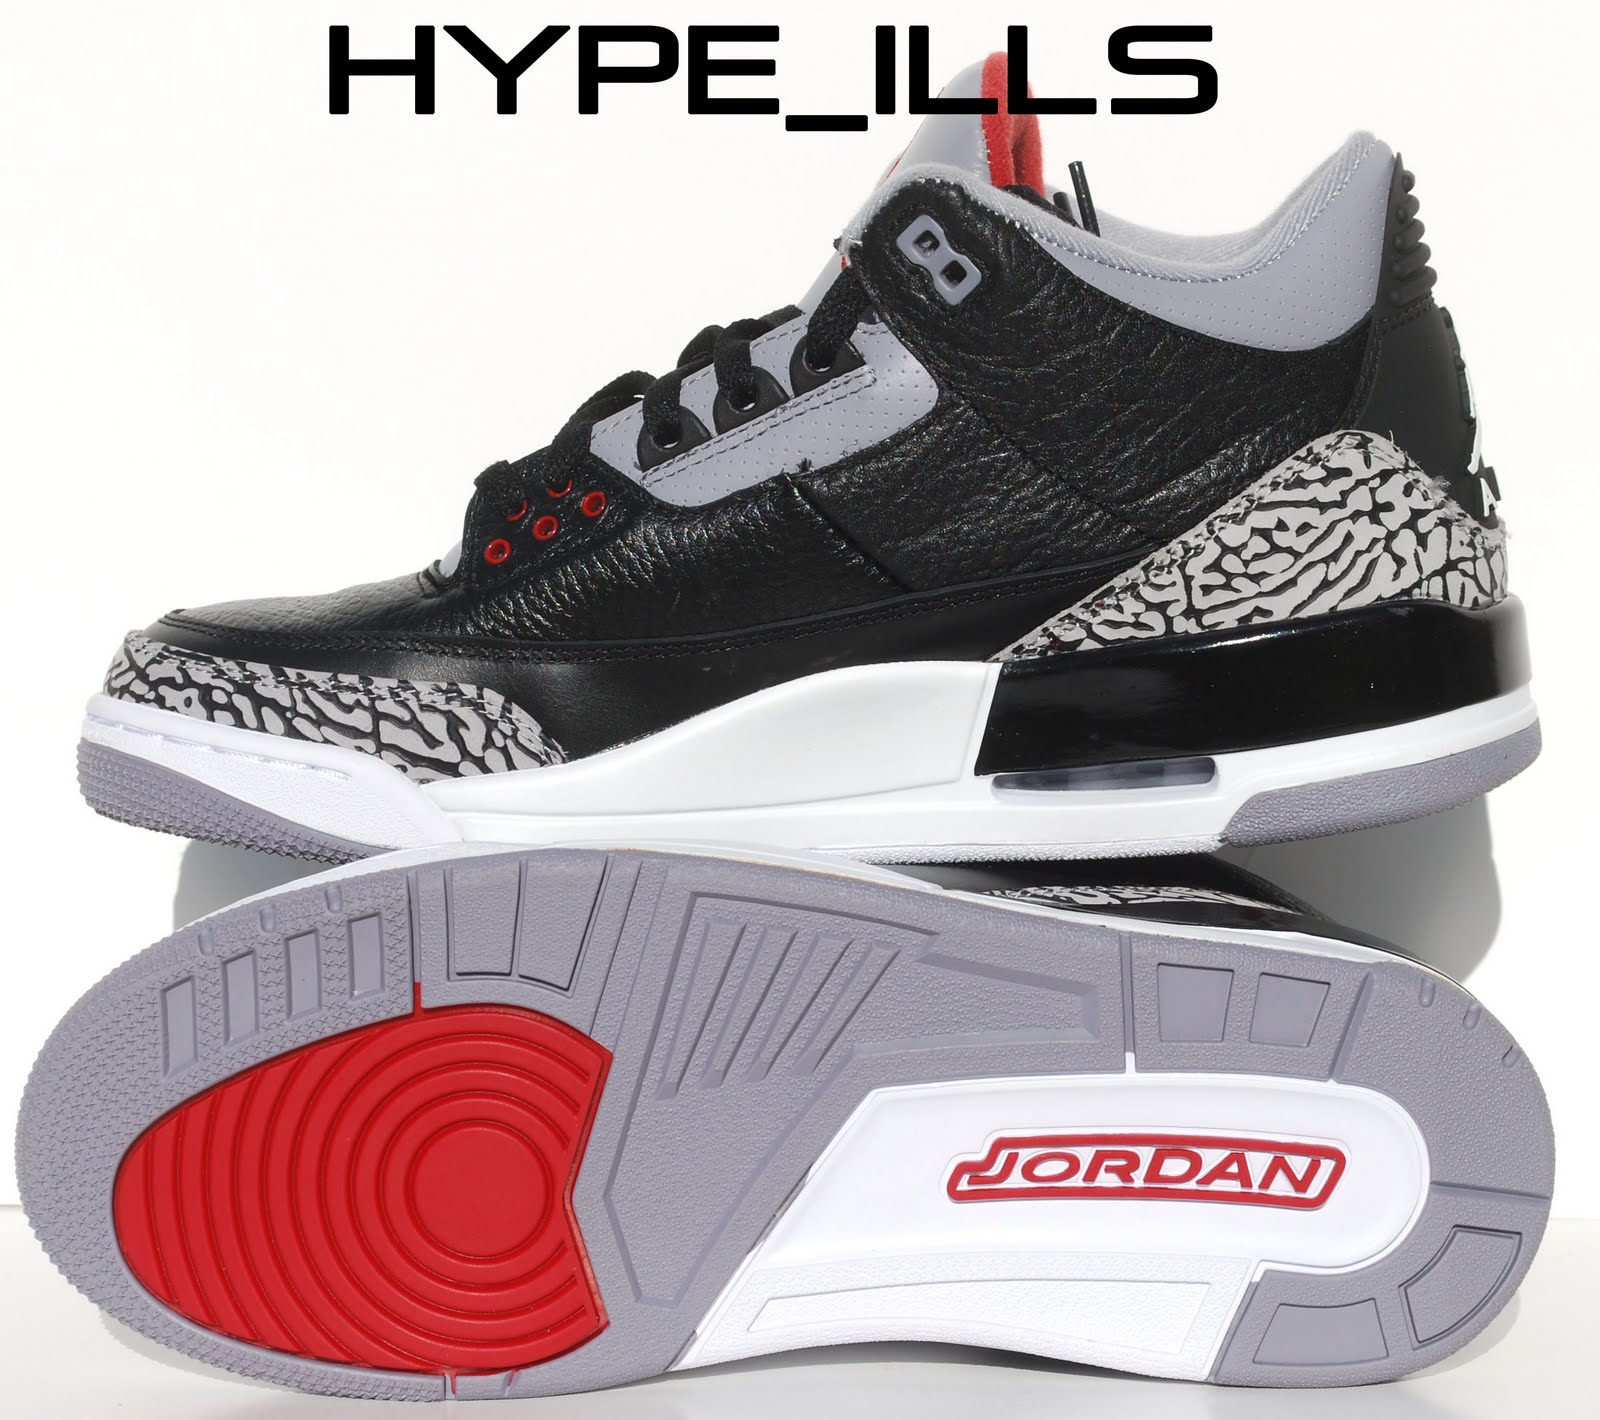 Hype ills: Nike Air Jordan III Retro "Black/Cement" 2011